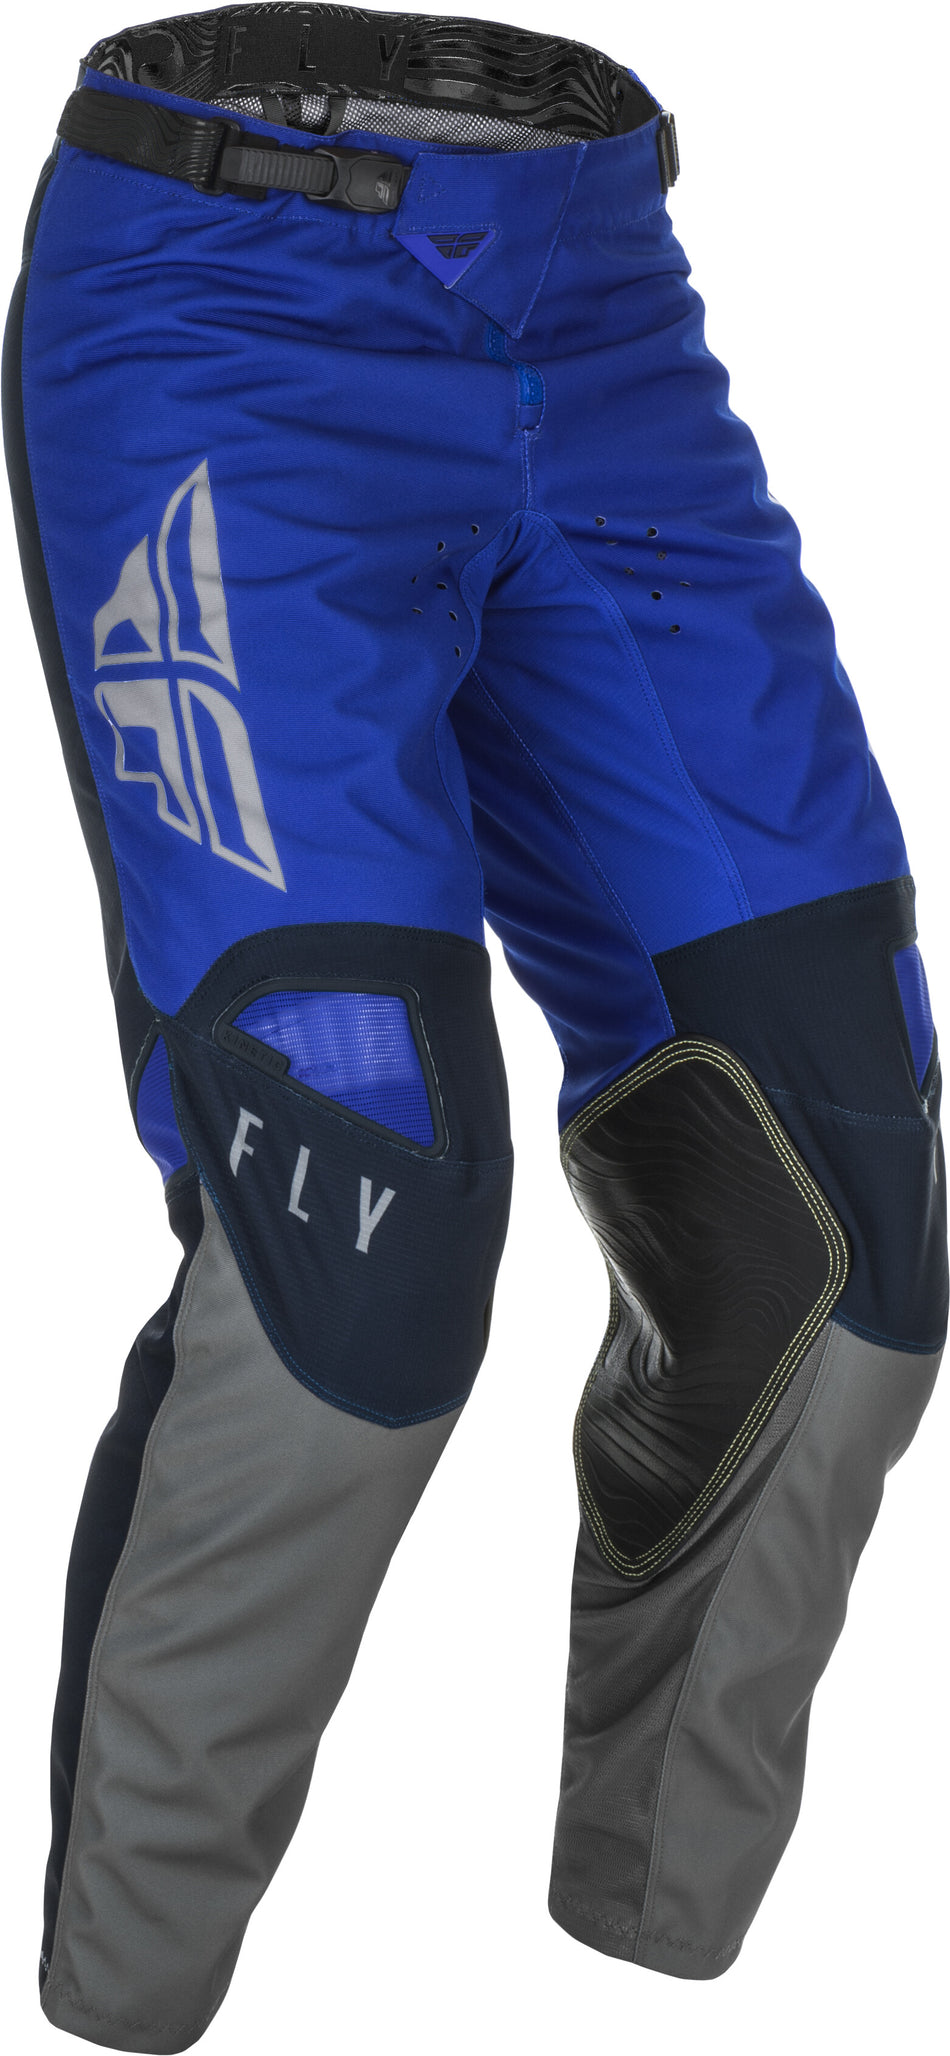 FLY RACING Youth Kinetic K121 Pants Blue/Navy/Grey Sz 26 374-43126